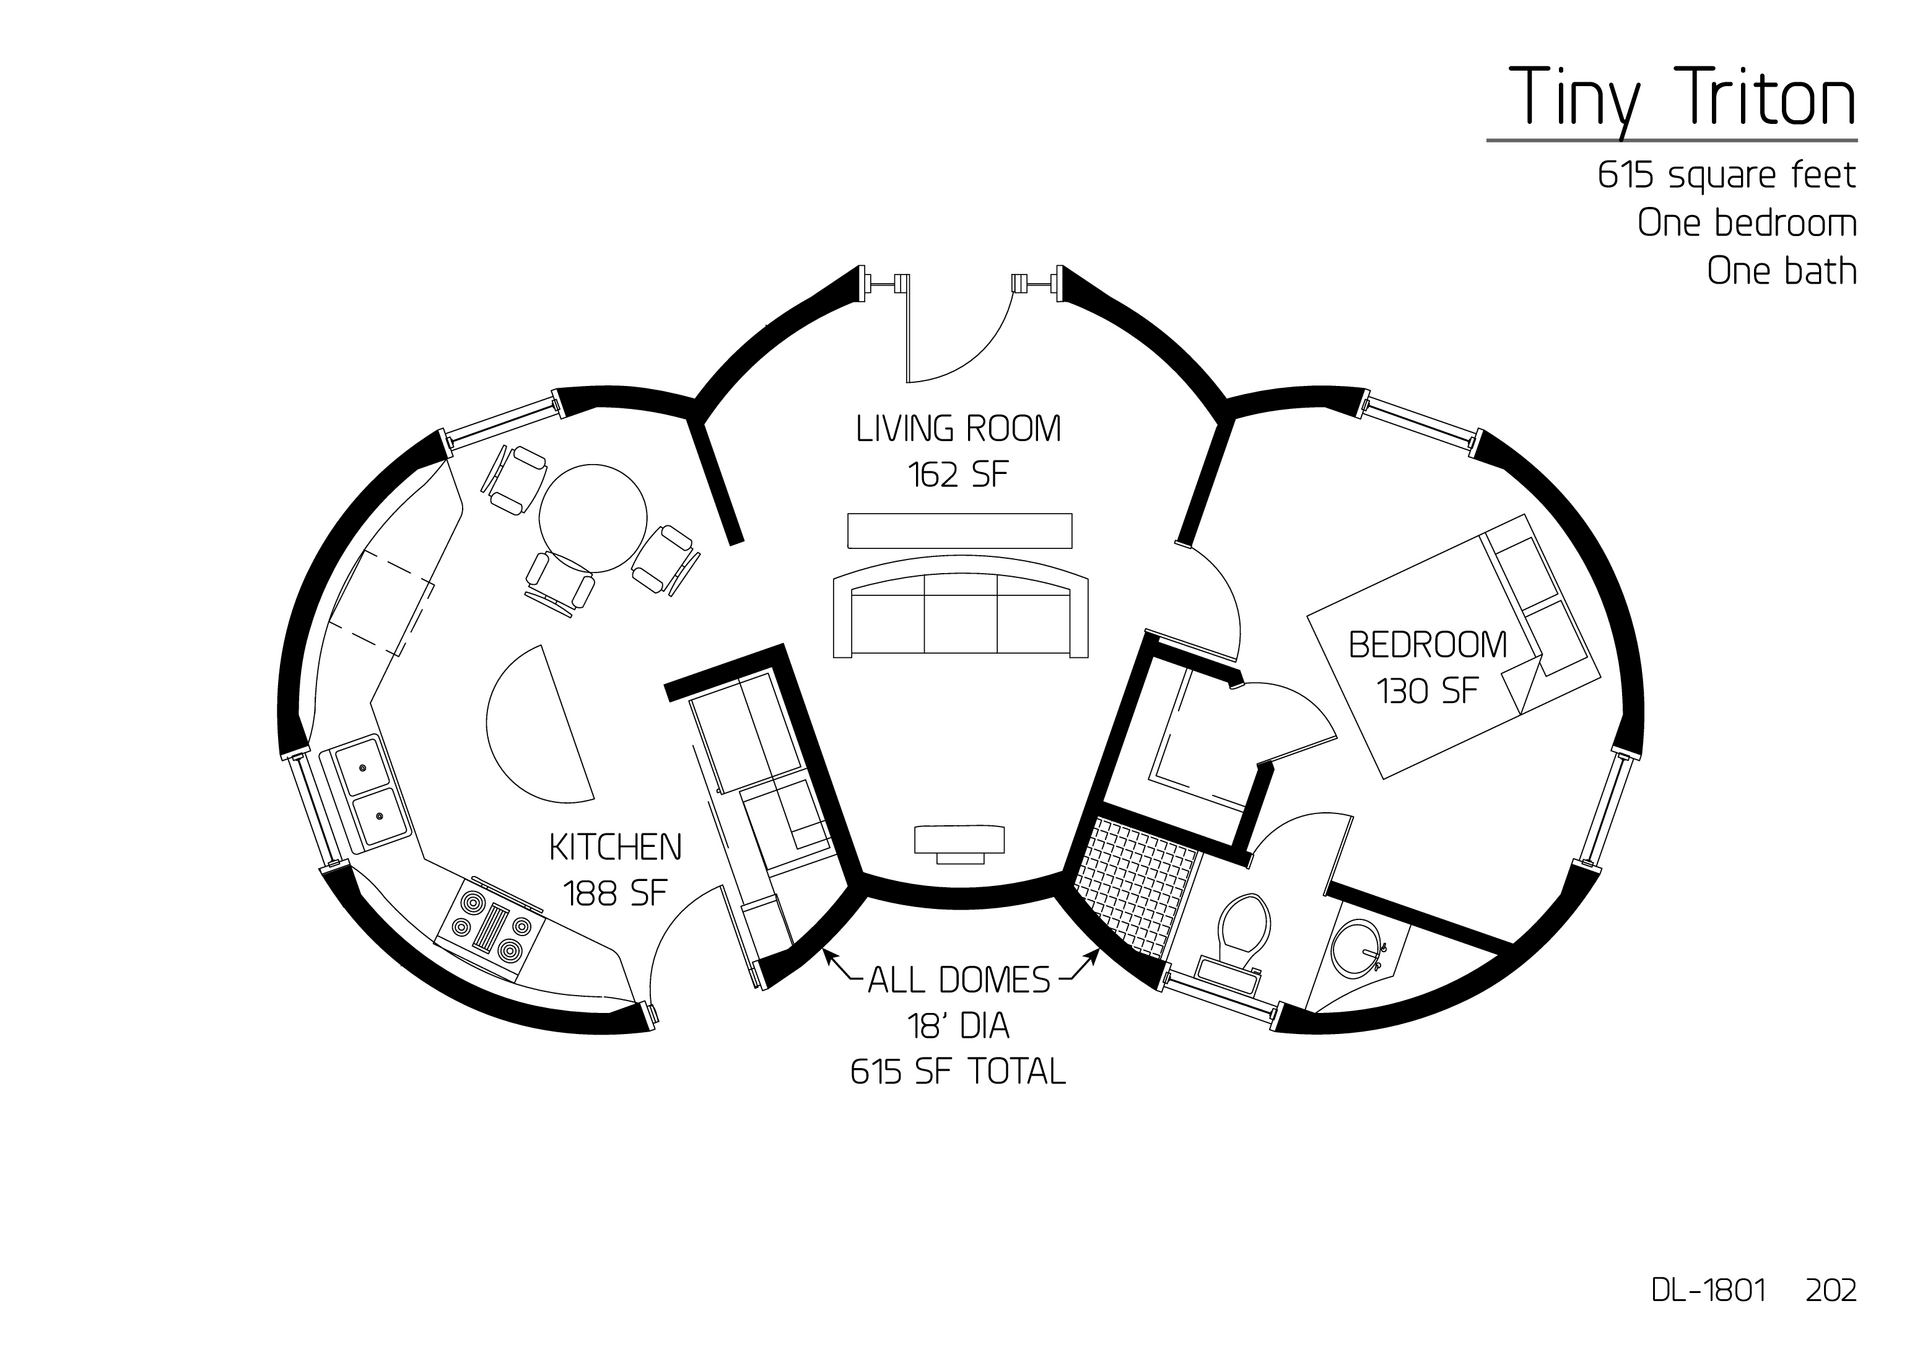 Tiny Triton: Three 18' Diameter Interconnected Domes, 615 SF, One-bedroom, One-Bath Floor Plan.